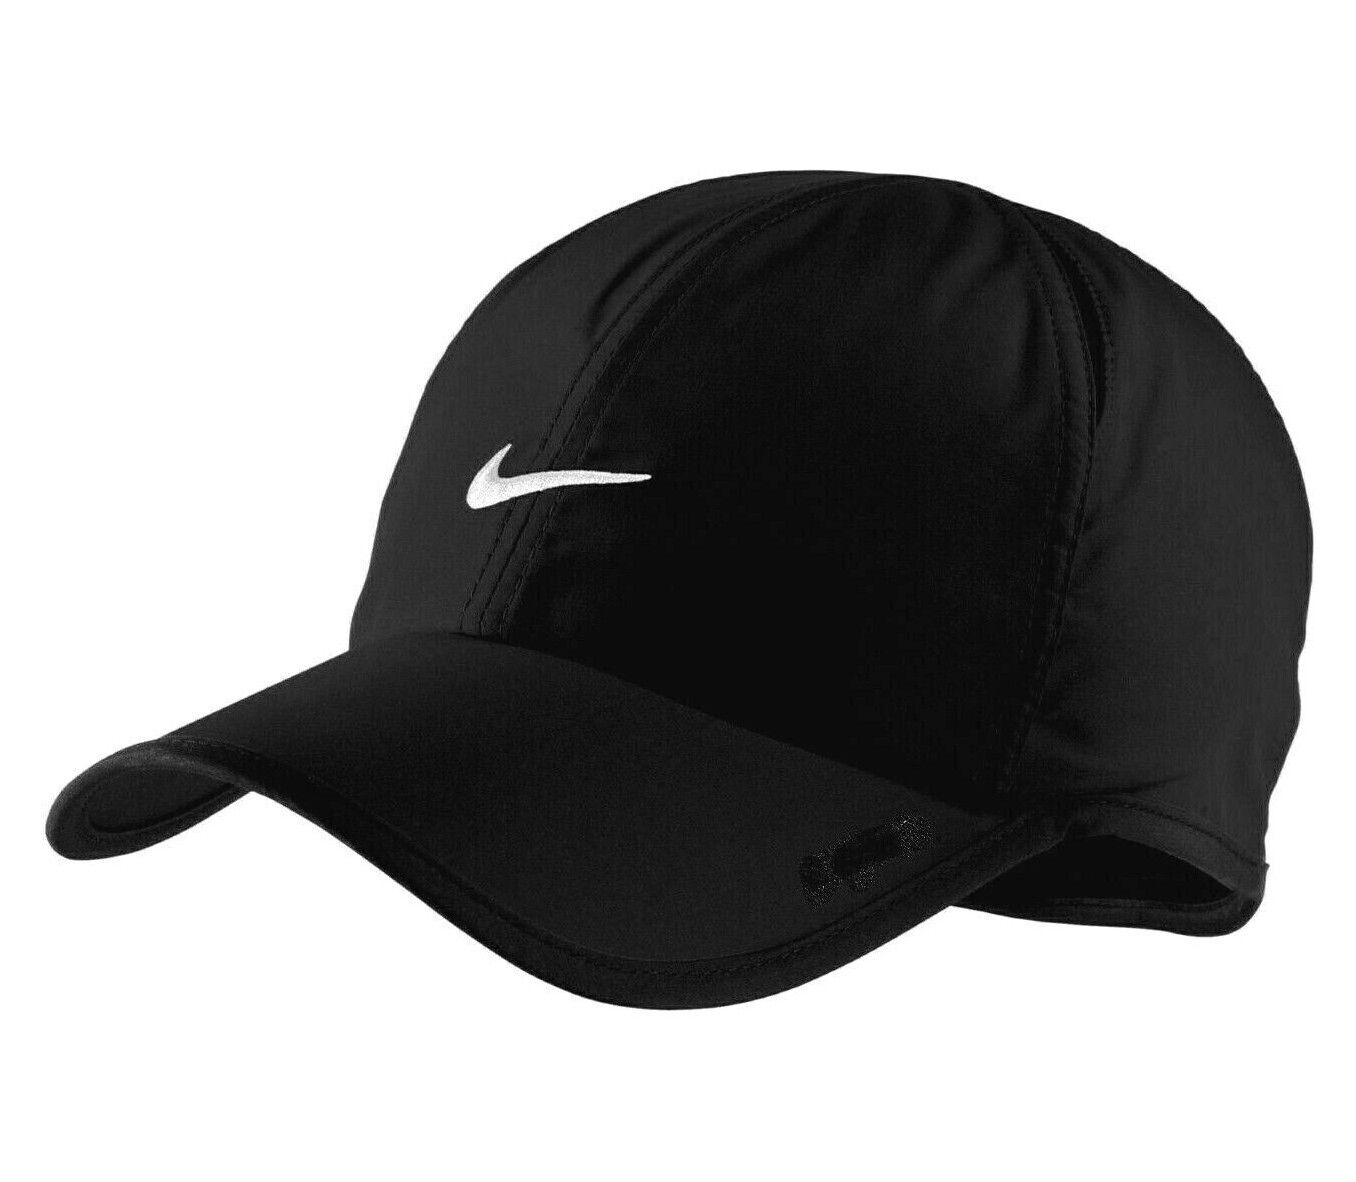 NEW! NIKE Adult Unisex Tennis/Golf/Run Cap DRI-FIT Featherlight Hat ...